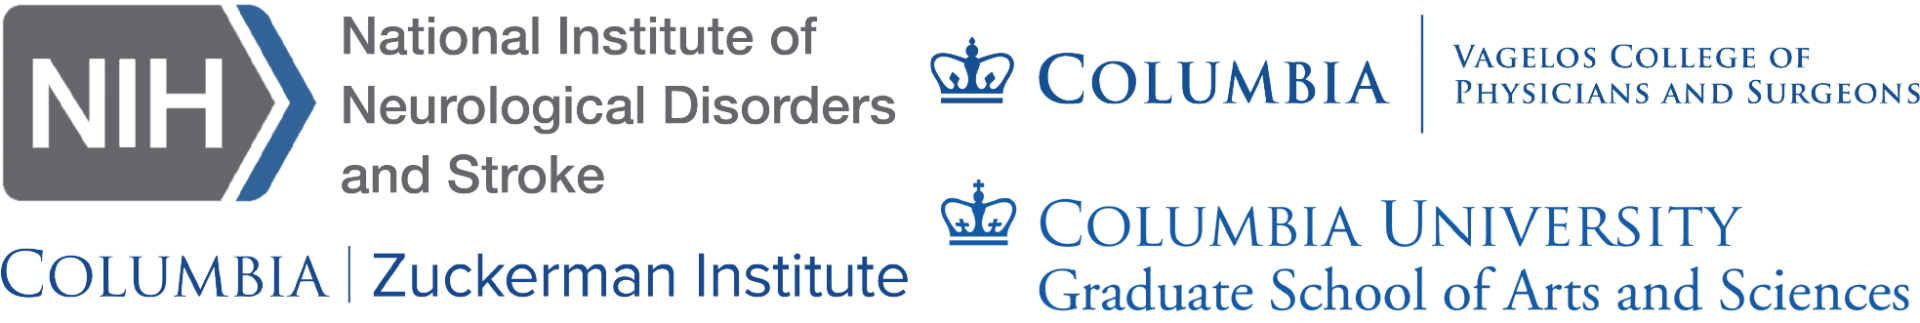 Logos for: NINDS, Columbia VP&S, Columbia GSAS, and Columbia's Zuckerman Institute